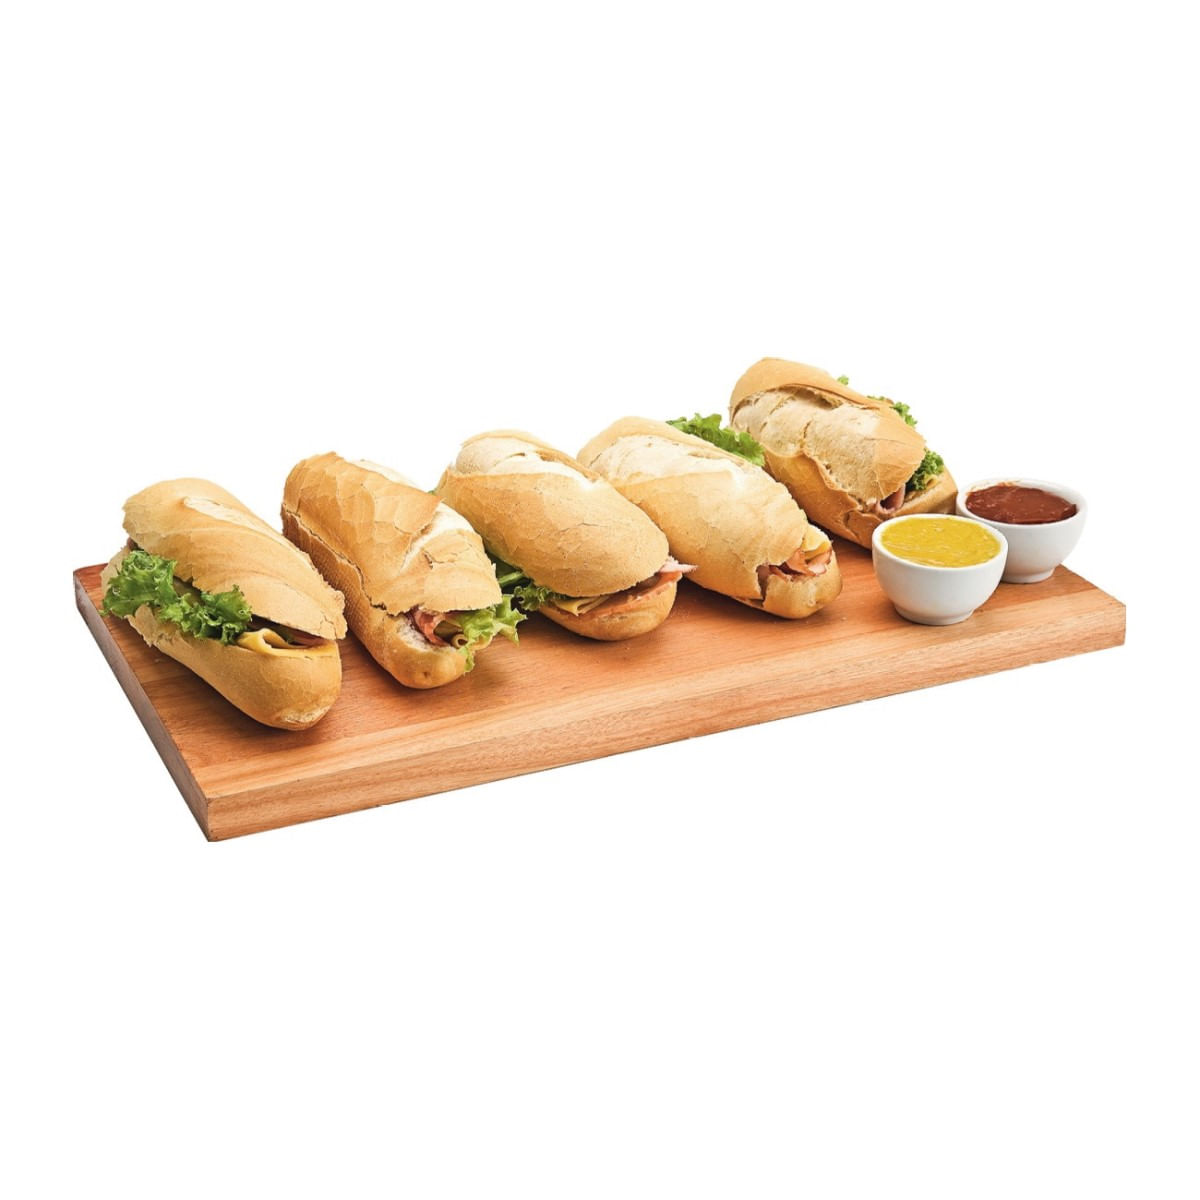 sanduiche-baguete-com-presunto-carrefour-310-g-1.jpg